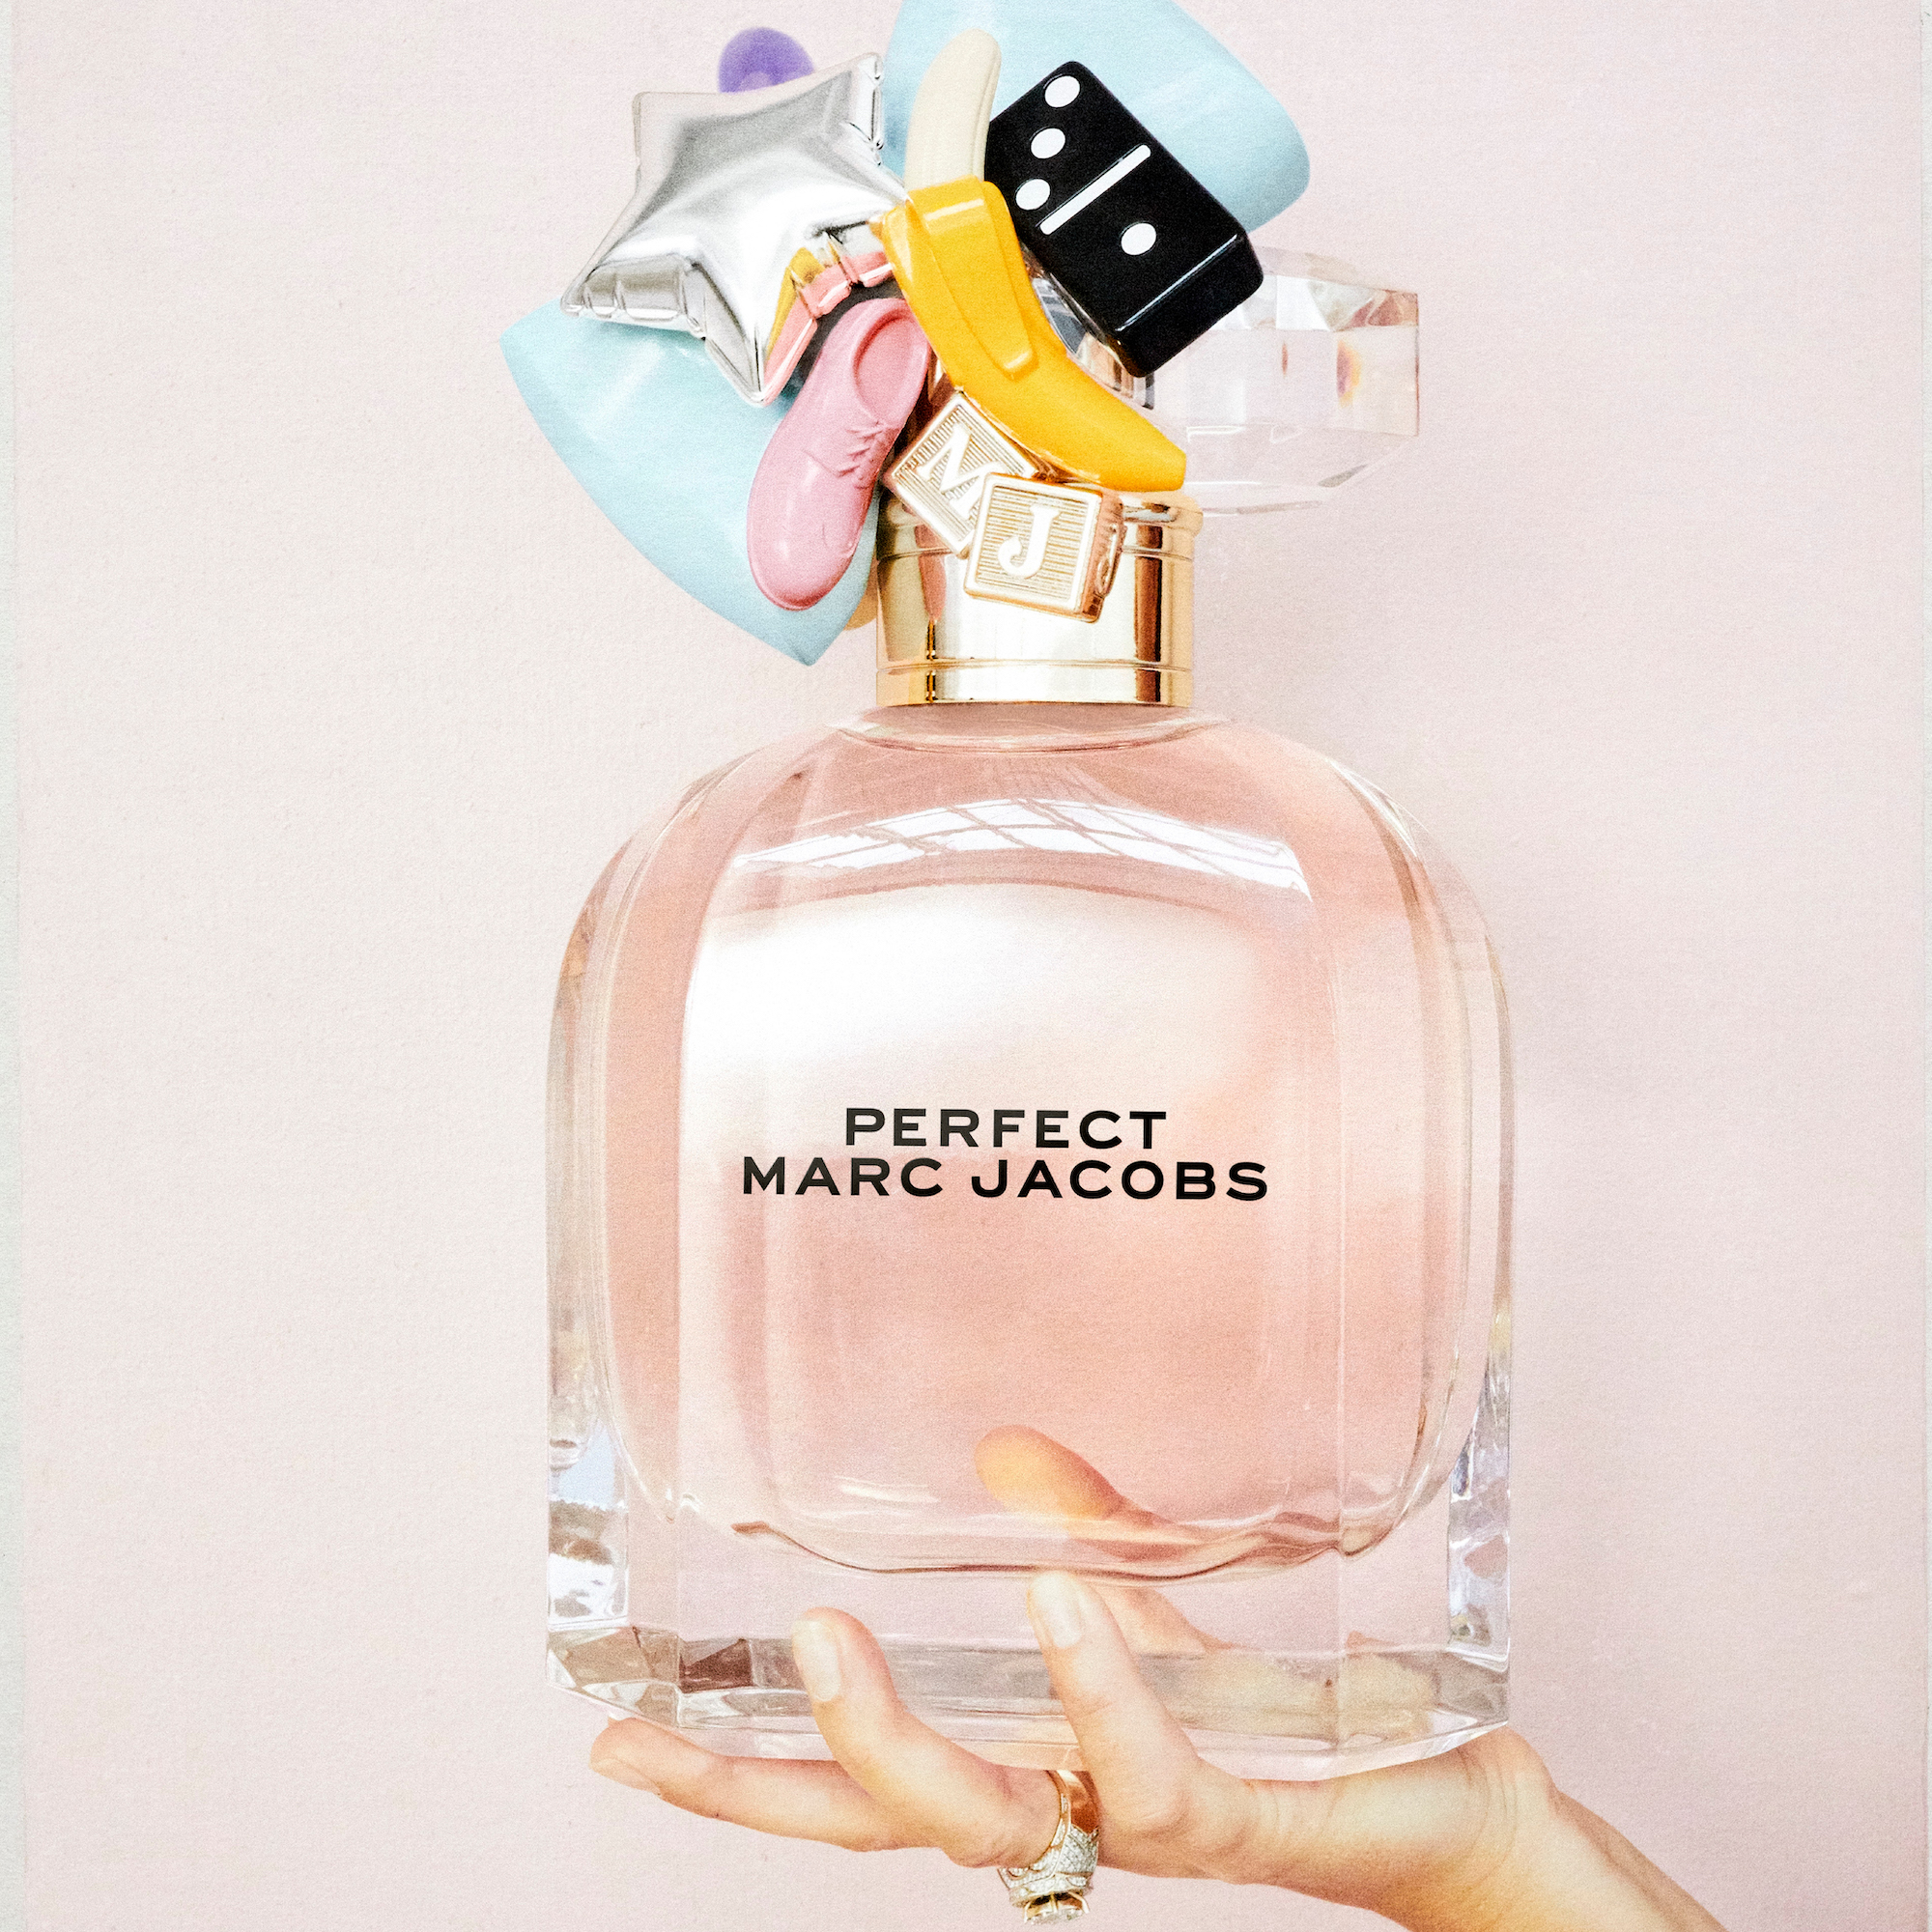 Marc Jacobs Fragrances (@marcjacobsfragrances) • Instagram photos